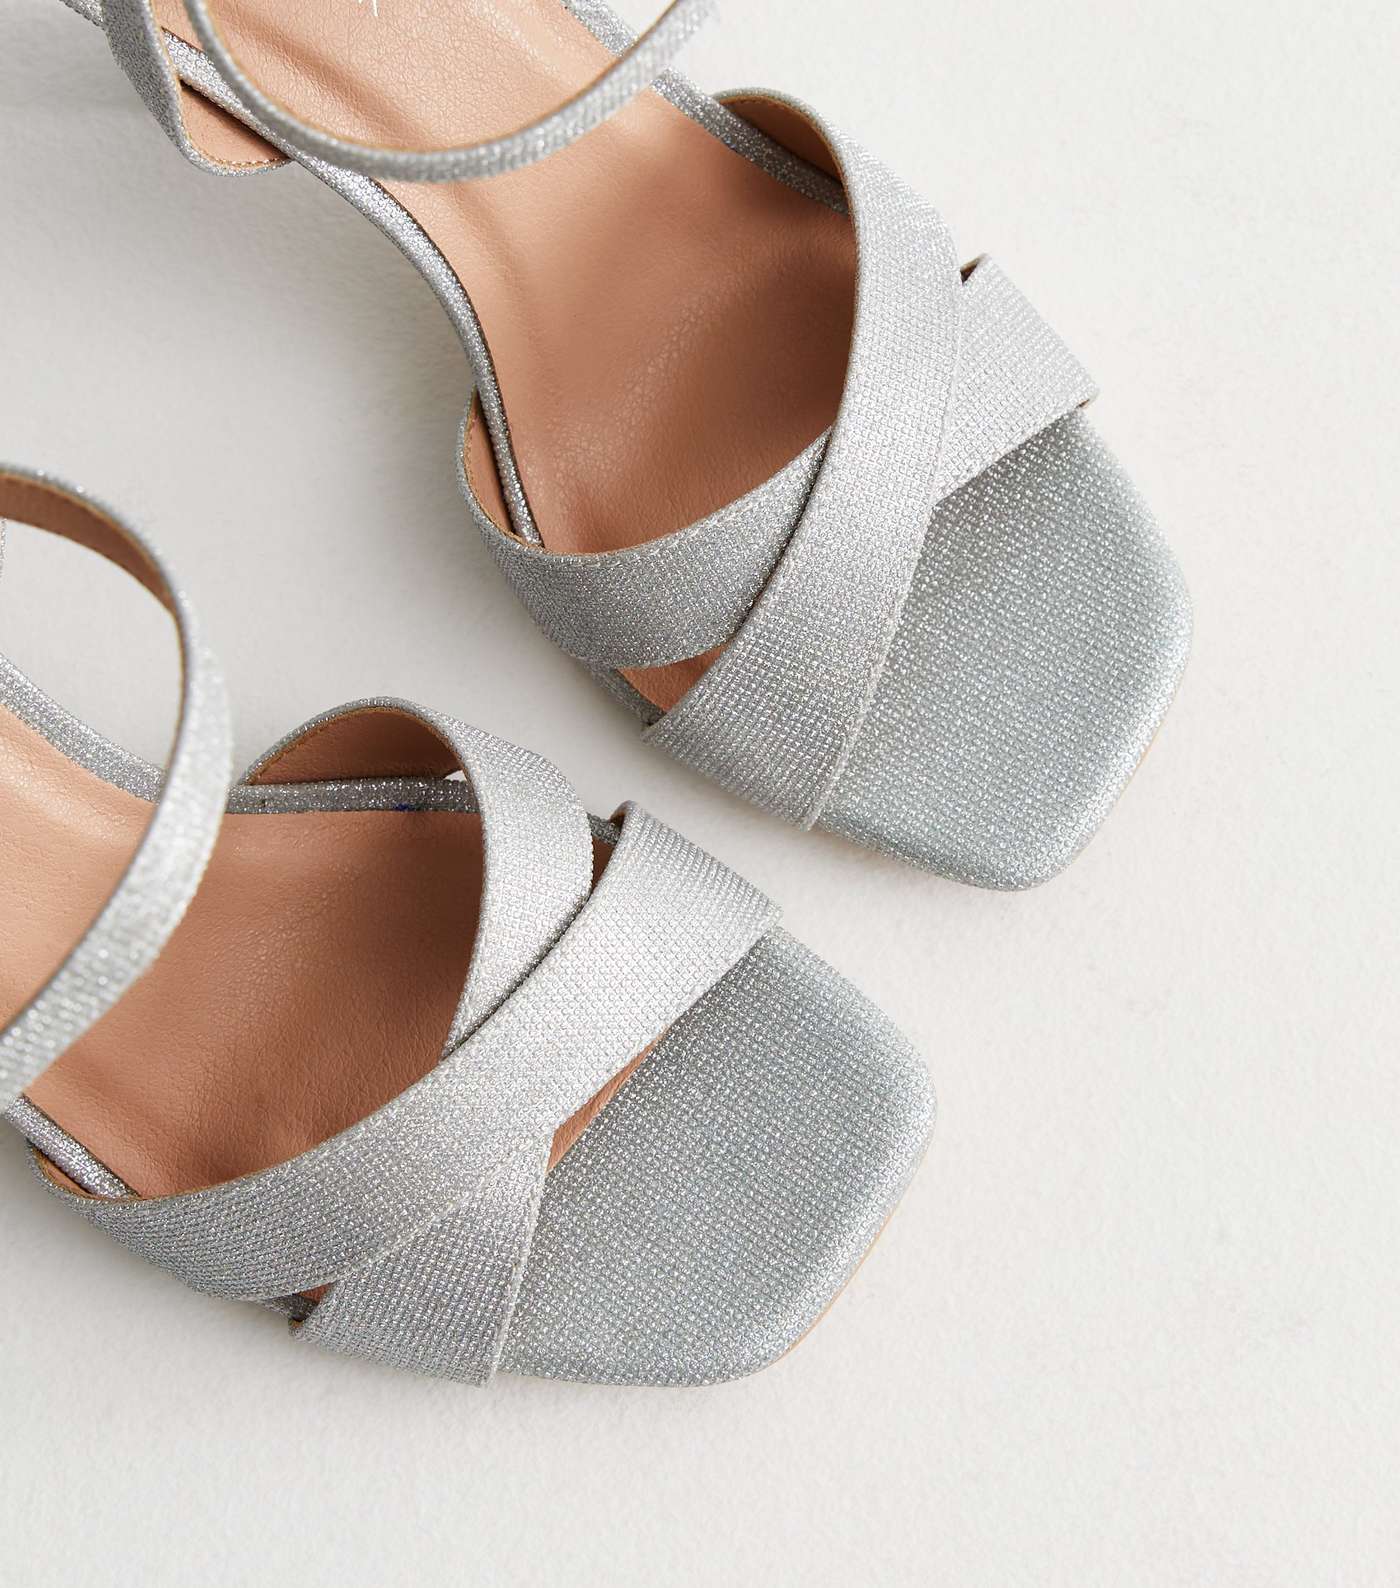 Silver Shimmer 2 Part Flared Stiletto Heel Sandals Image 3